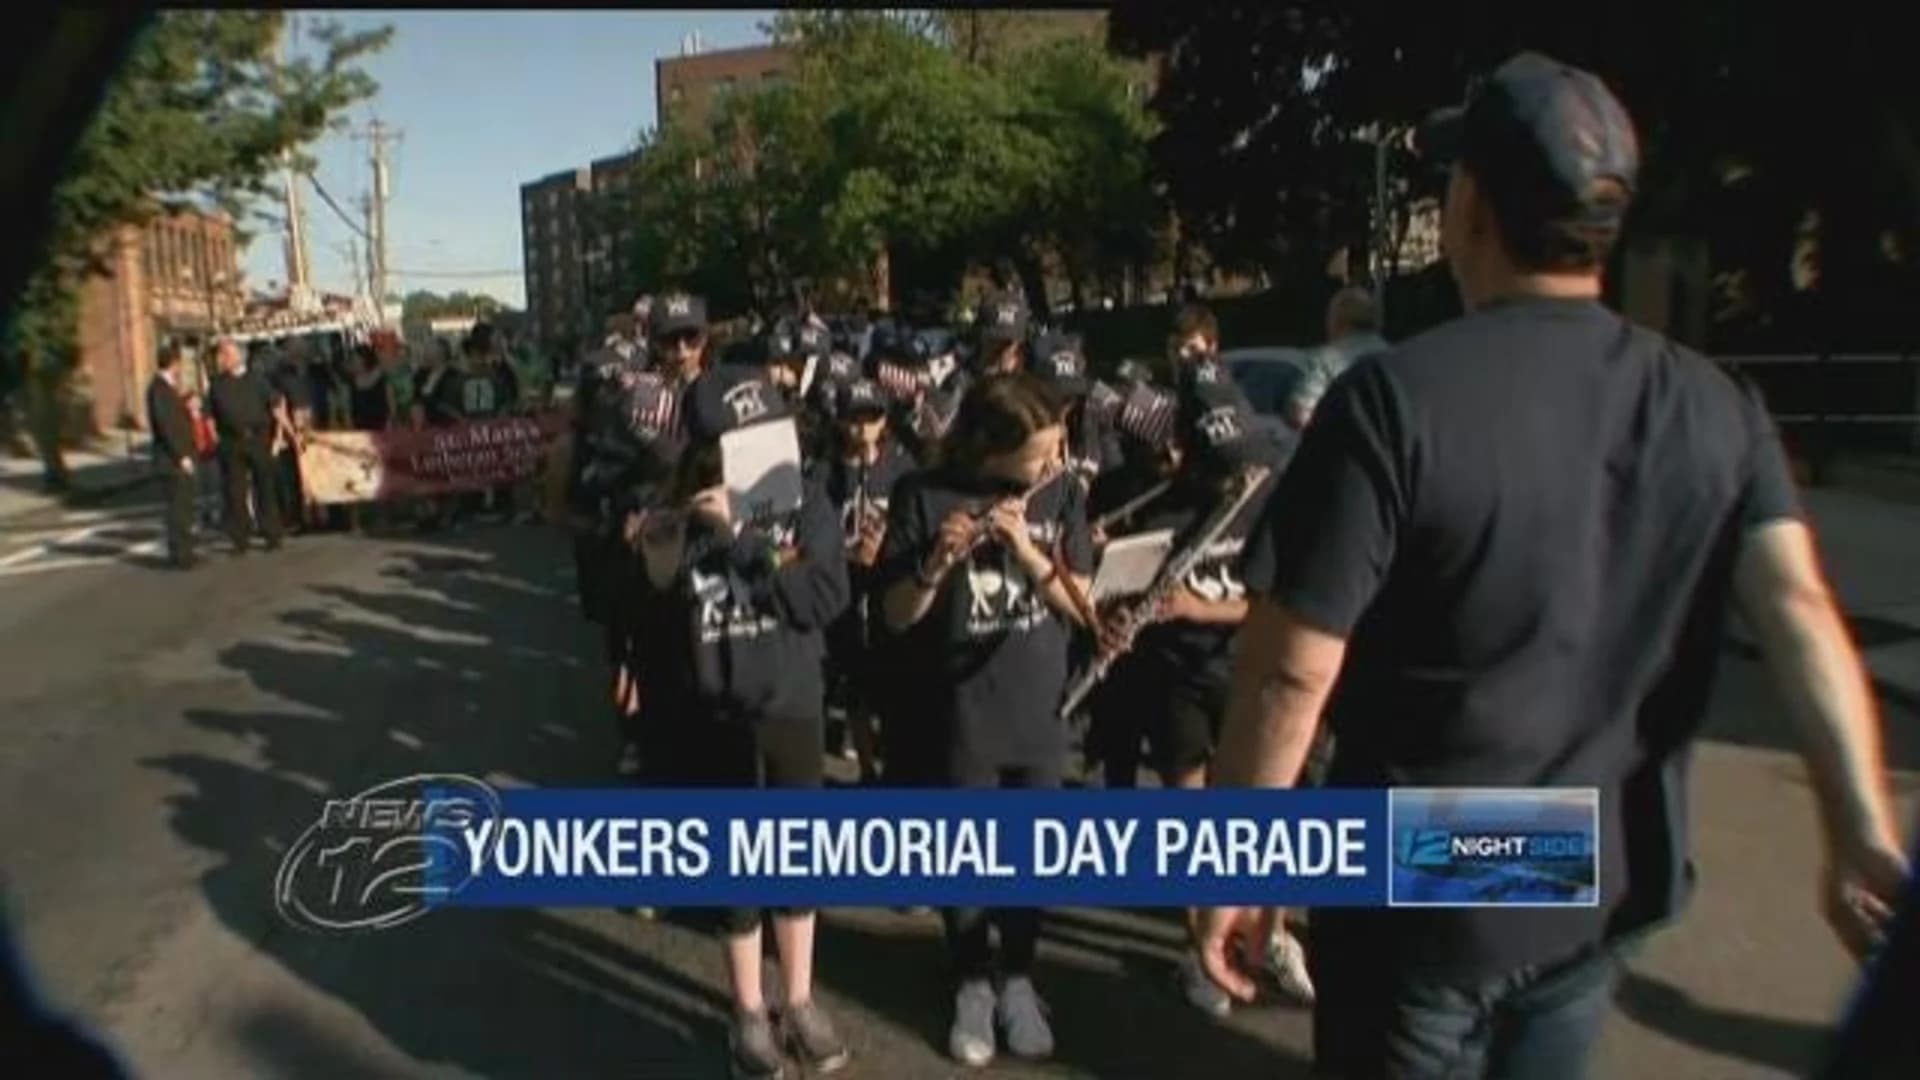 Annual Memorial Day Parade held in Yonkers